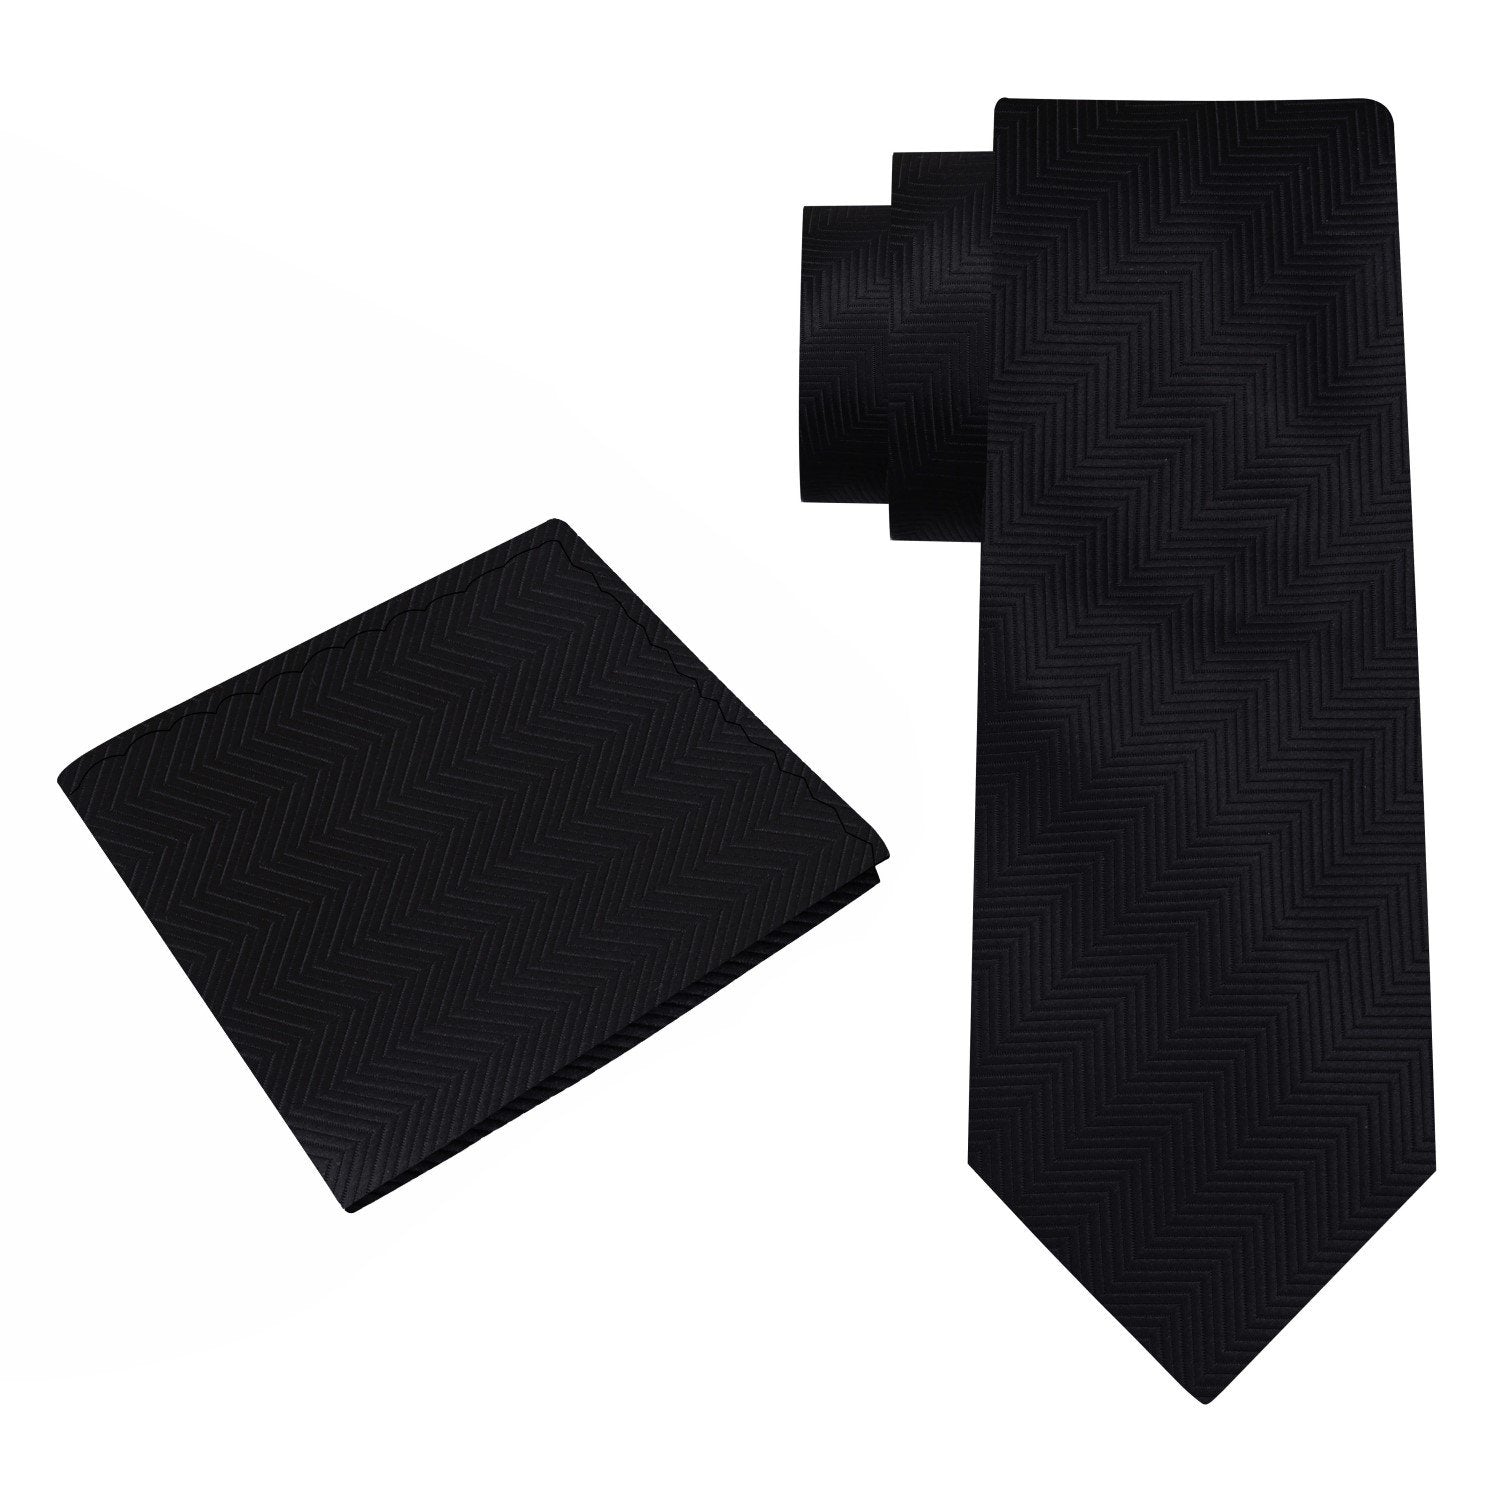 Alt View: A Solid Black Pattern Silk Necktie, Matching Pocket Square